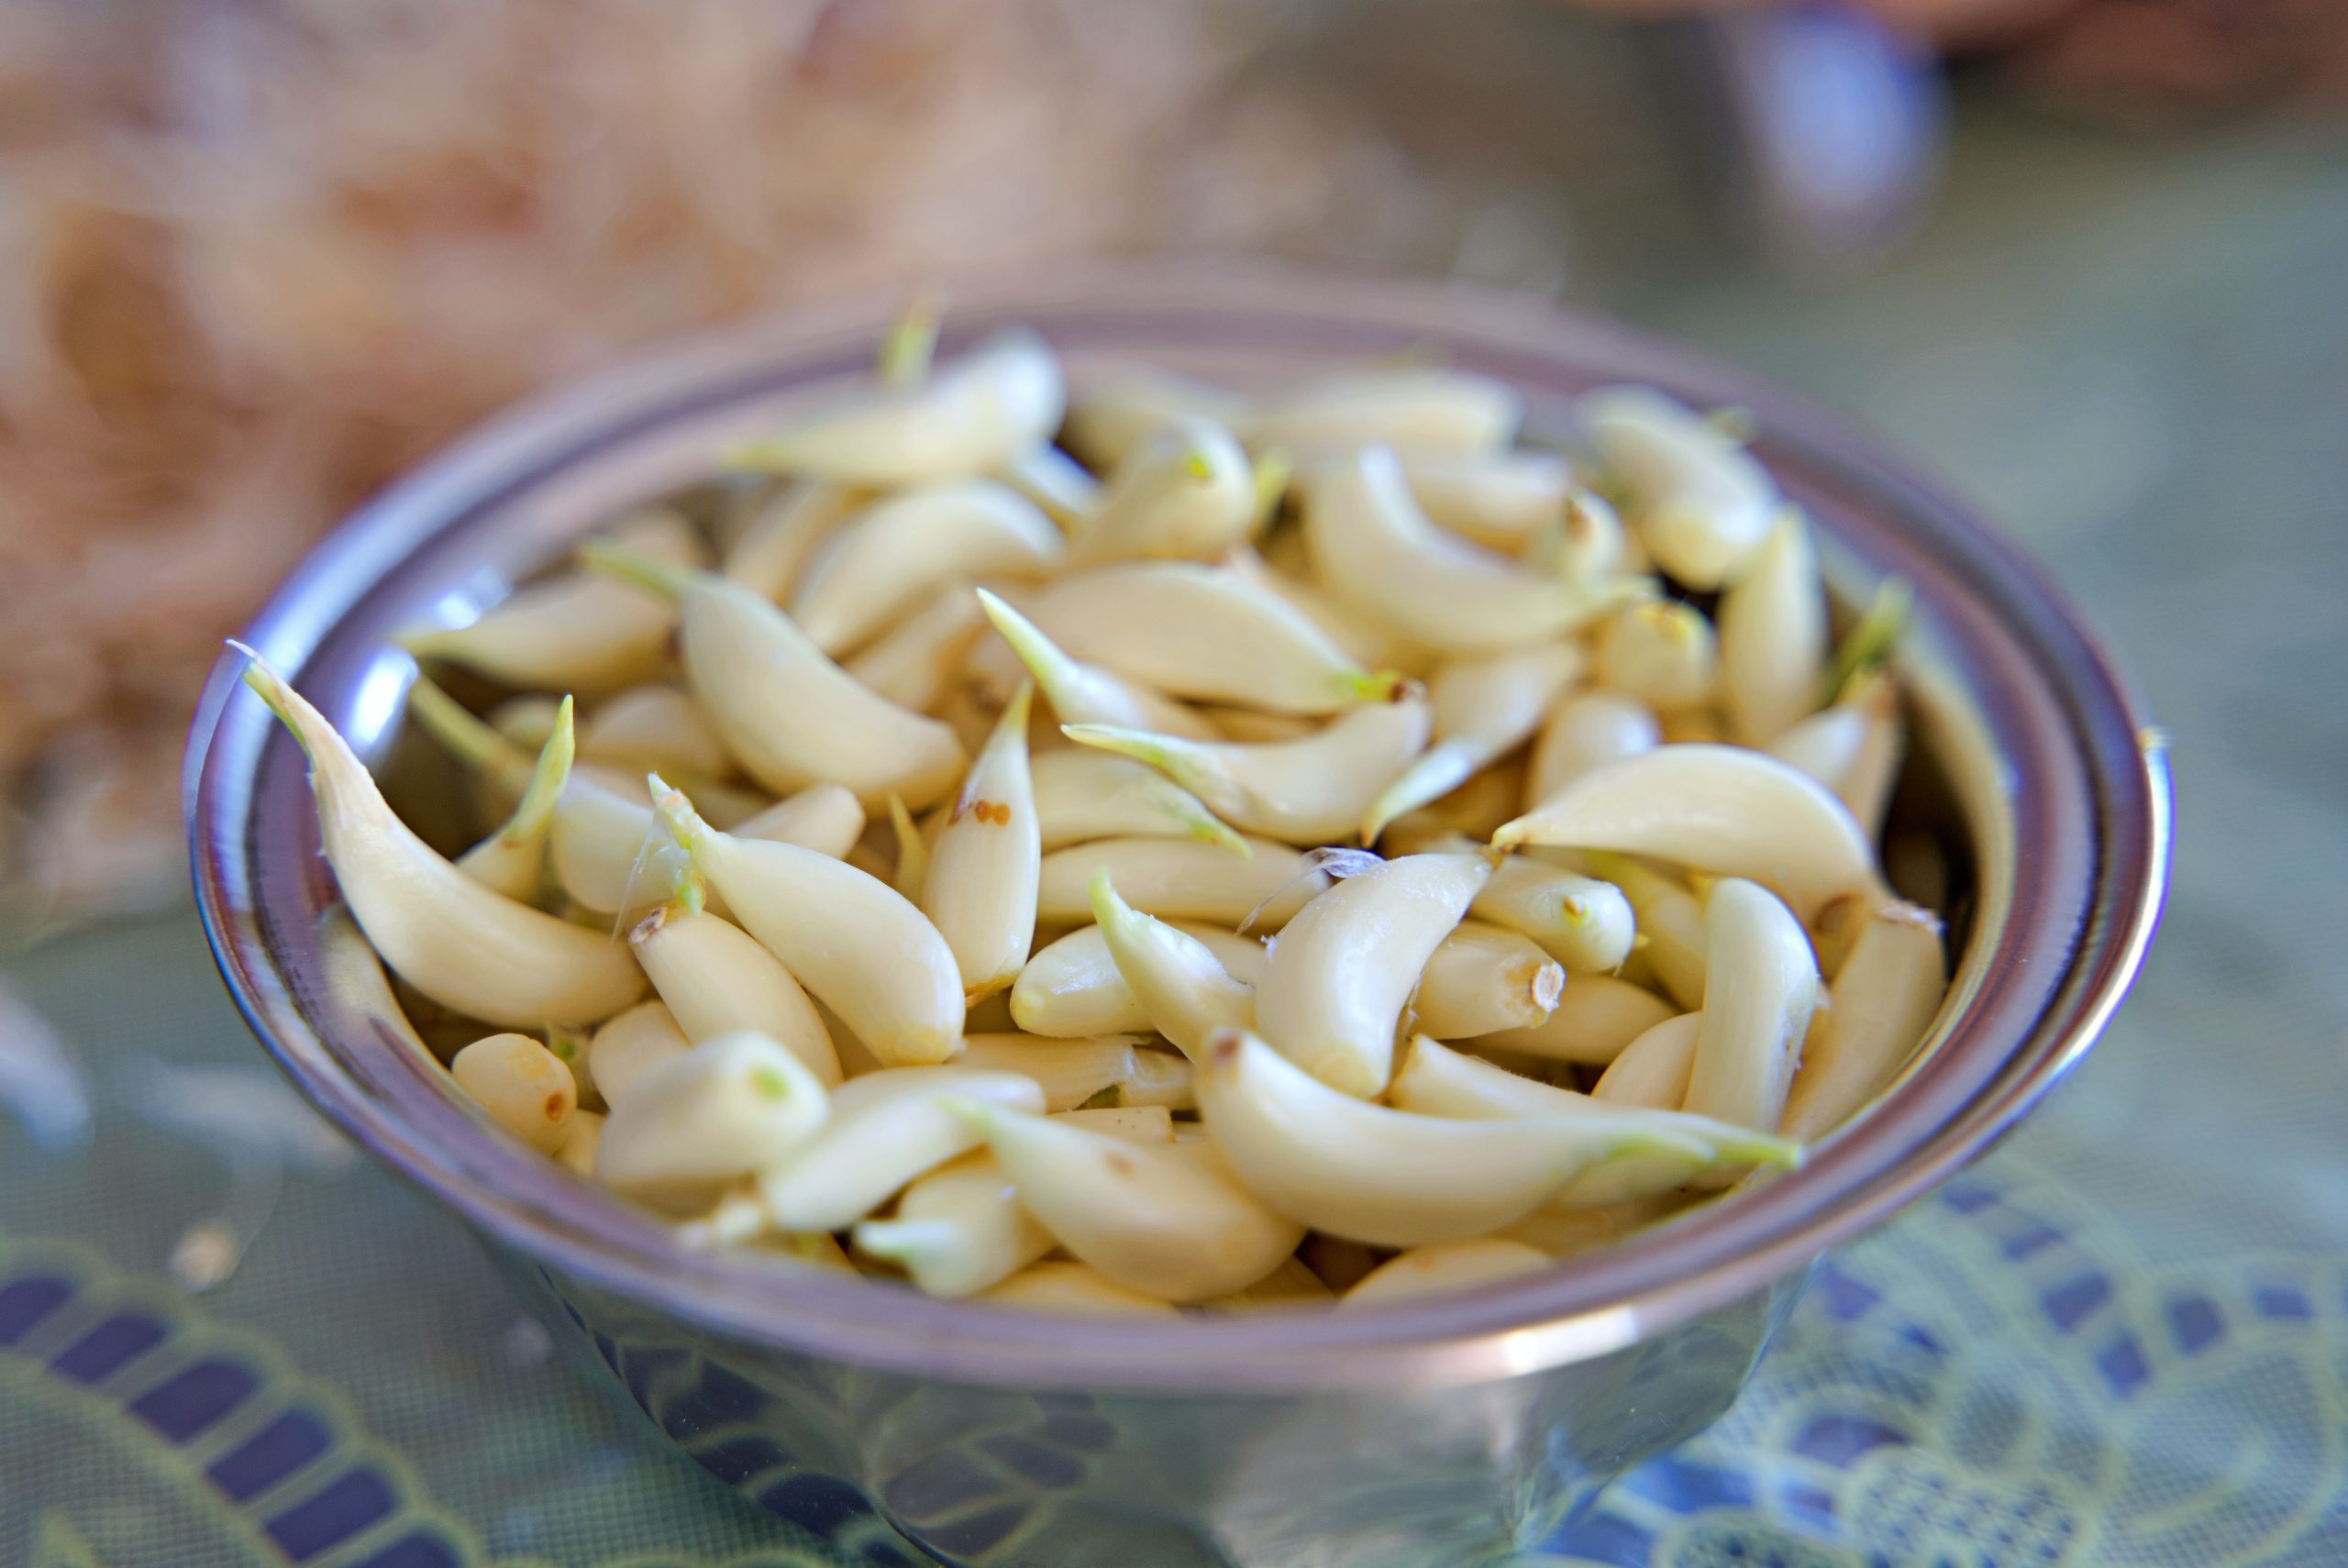 Garlic Powder: Benefits, Uses, and Preparation